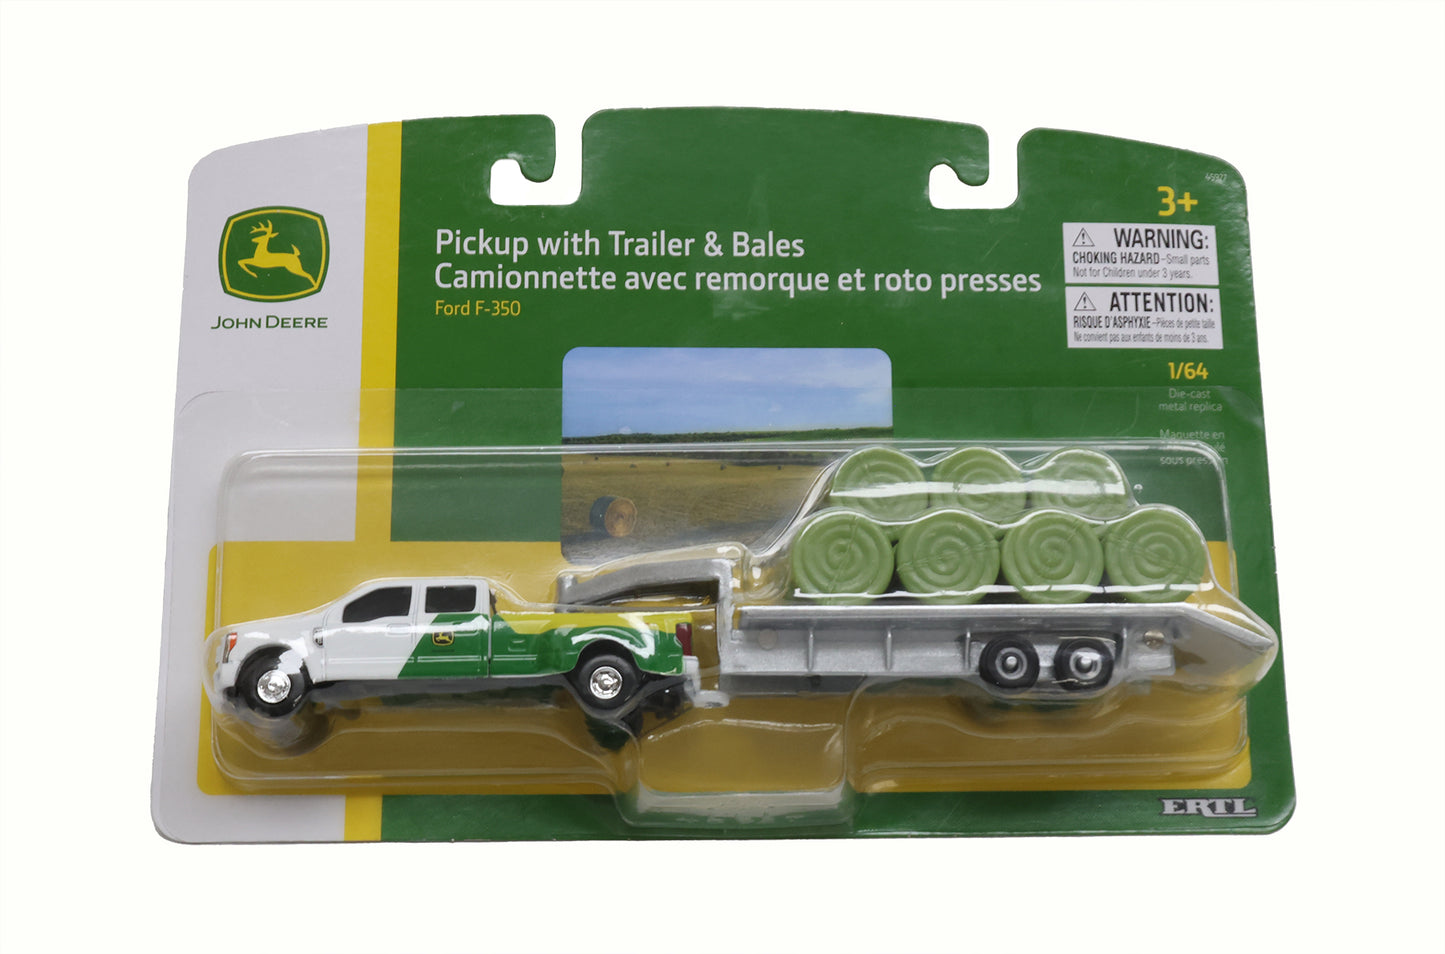 1/64 John Deere Pickup with Trailer & Bales Toy - LP84529